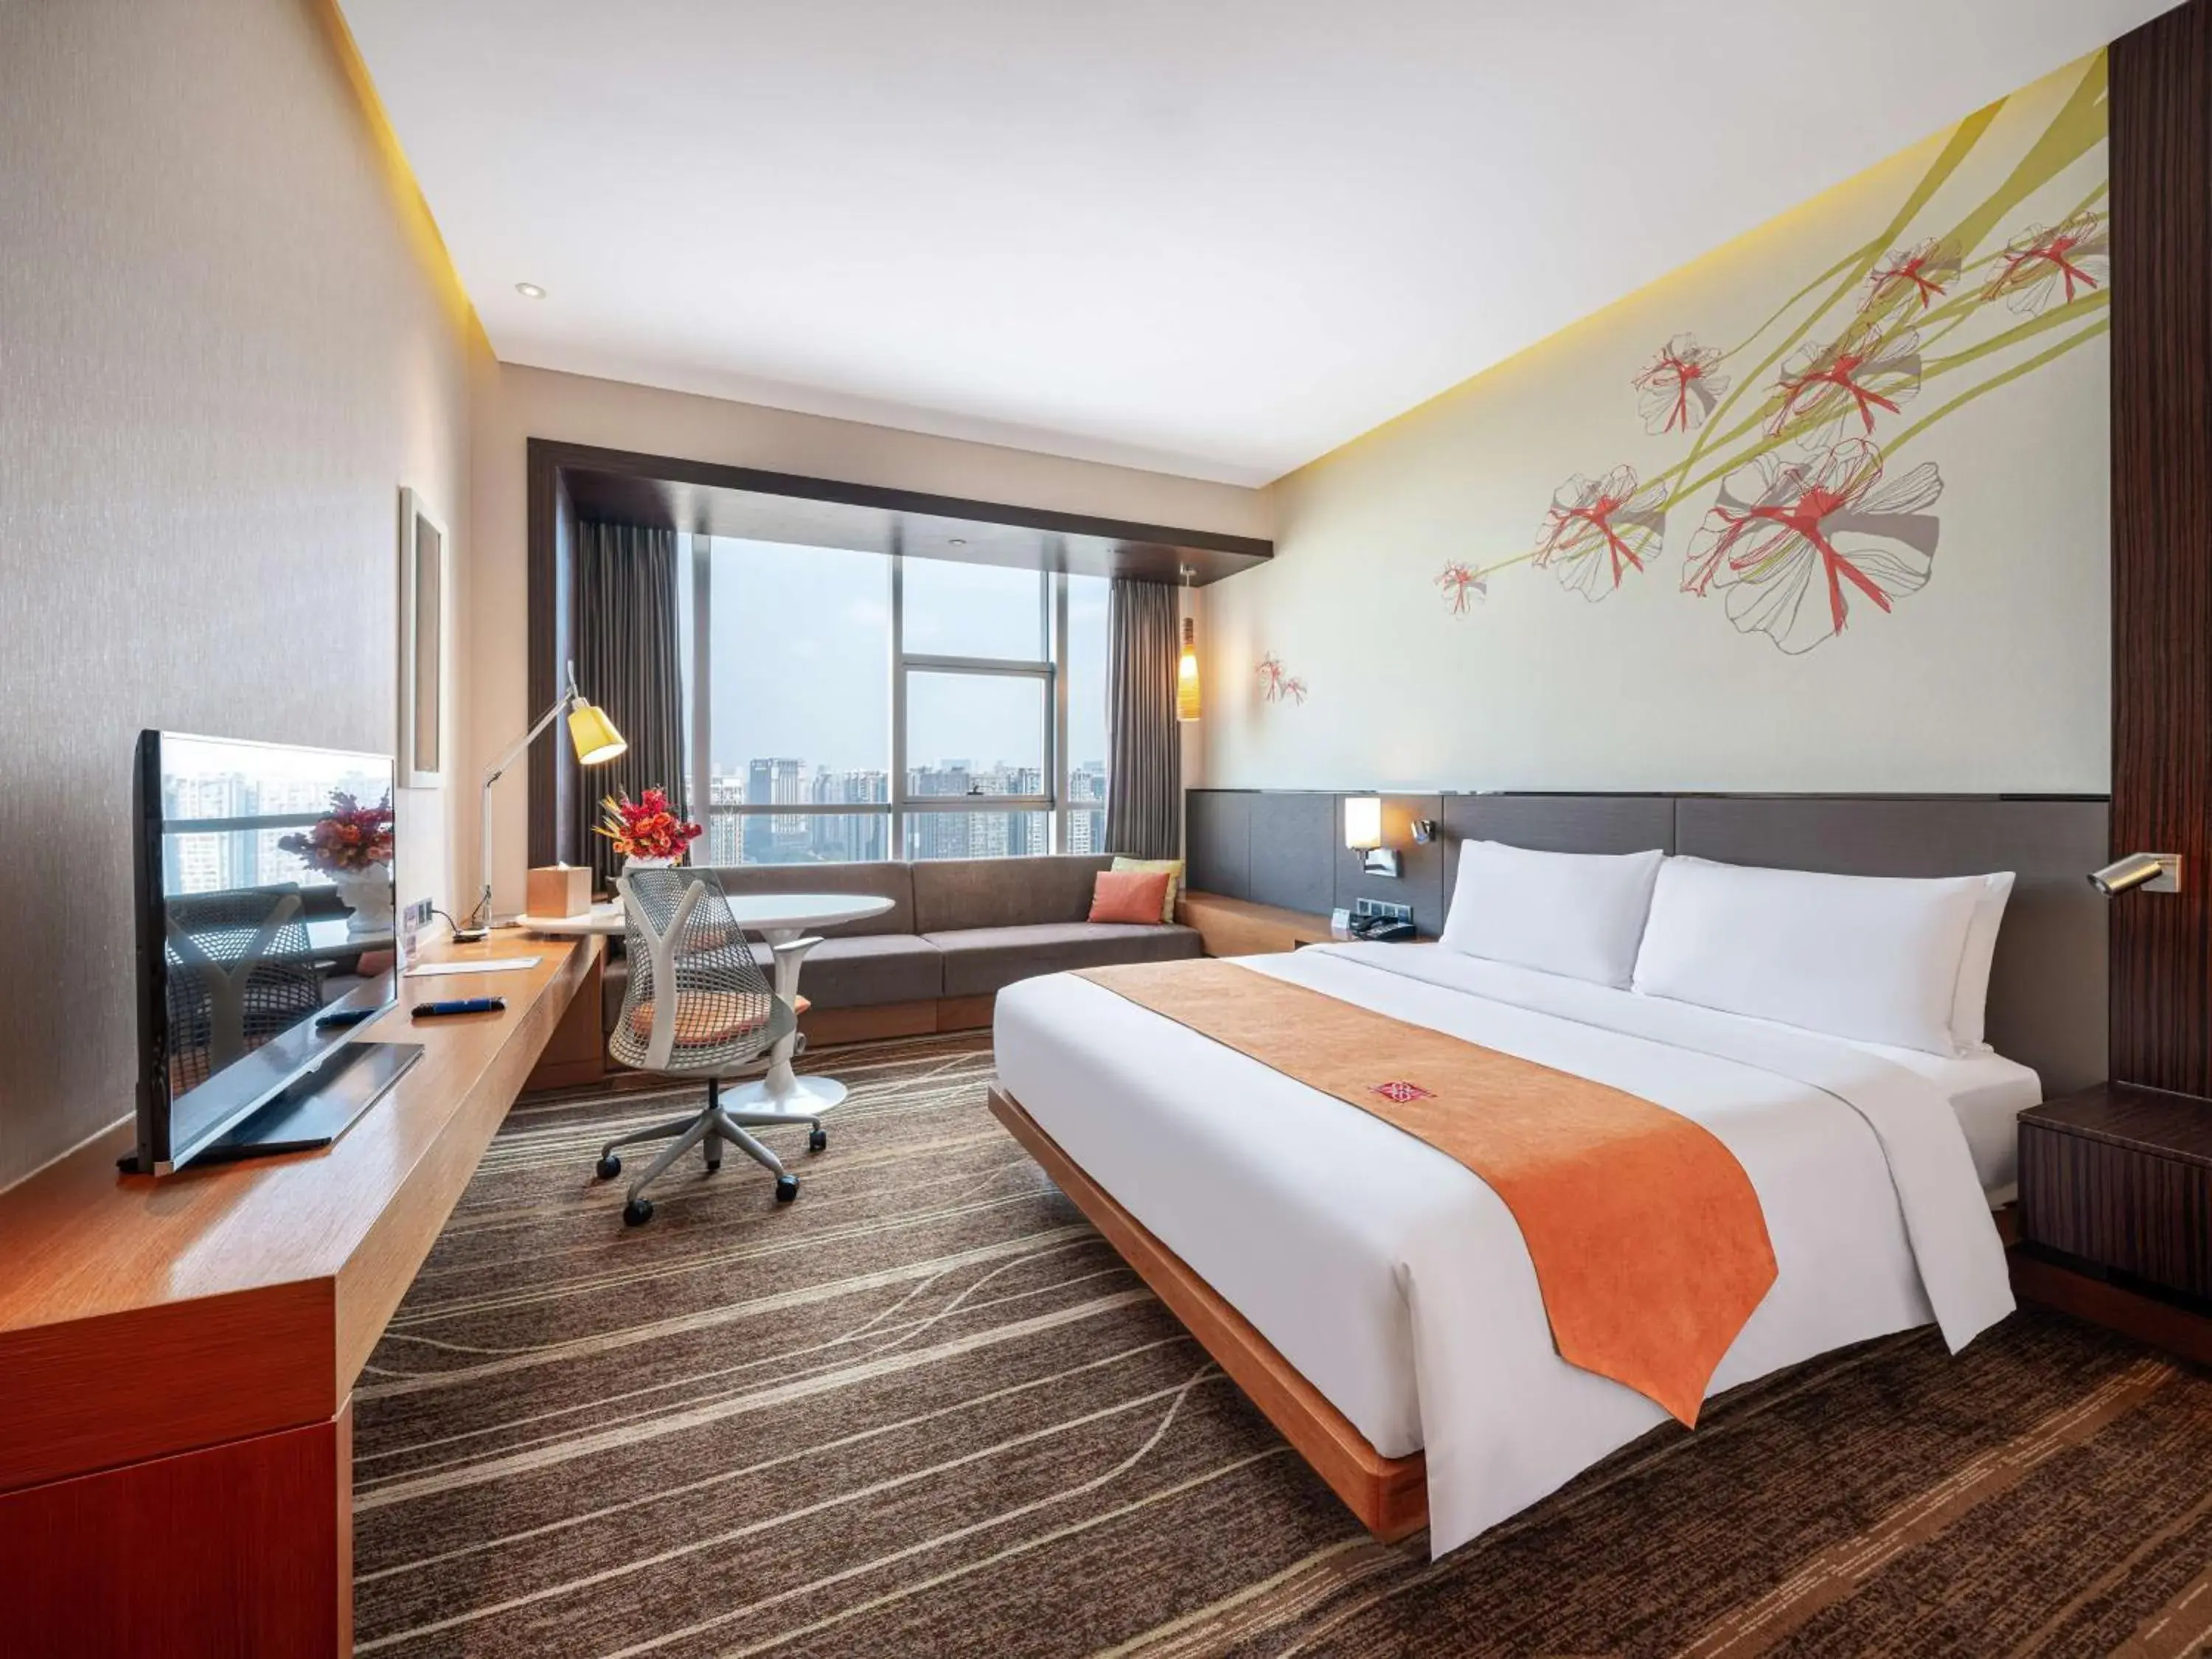 Bedroom in Hilton Garden Inn Chengdu Huayang